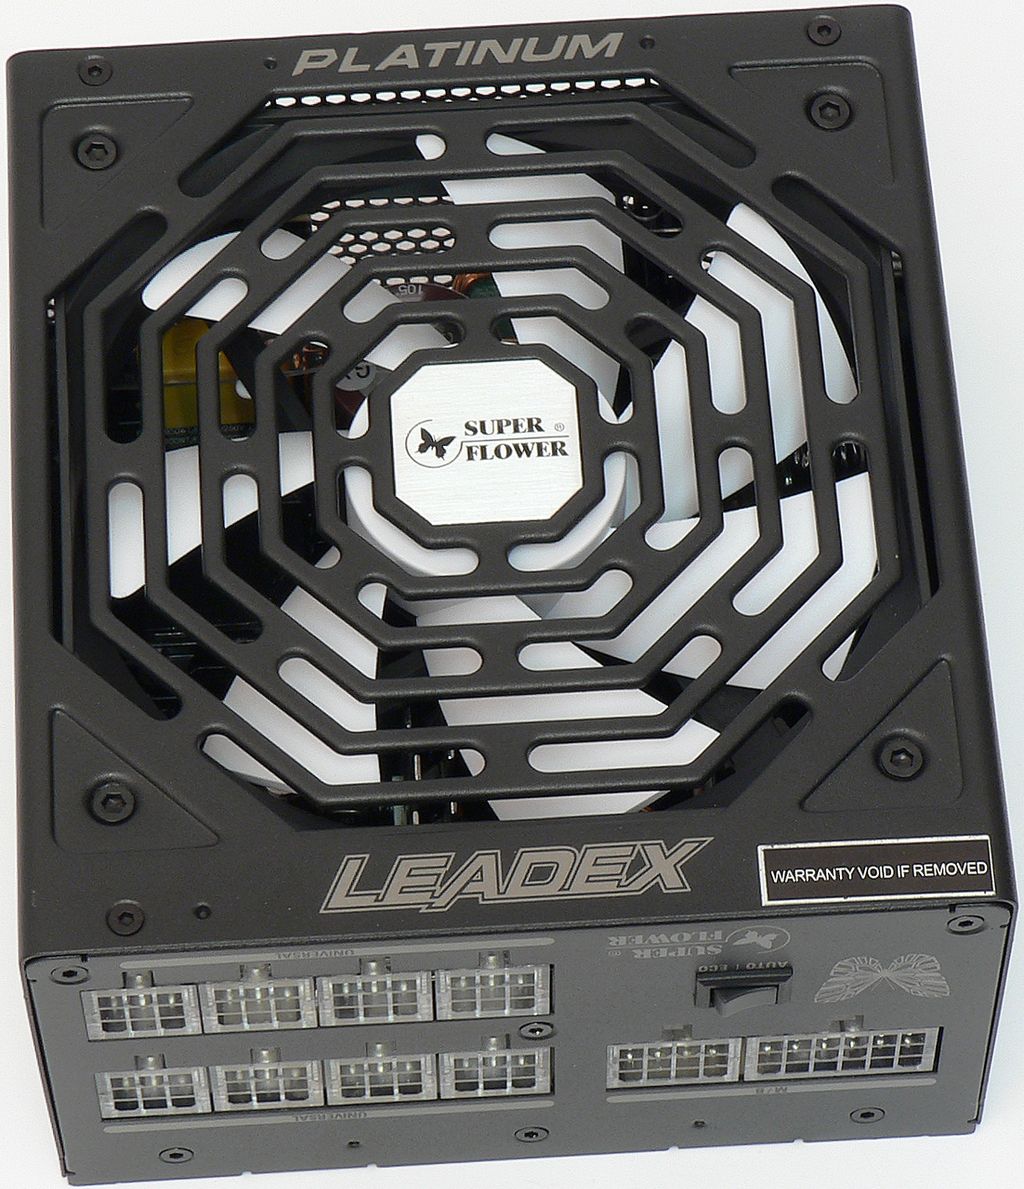 Semi-pasivní Super Flower Leadex Platinum 750 W 